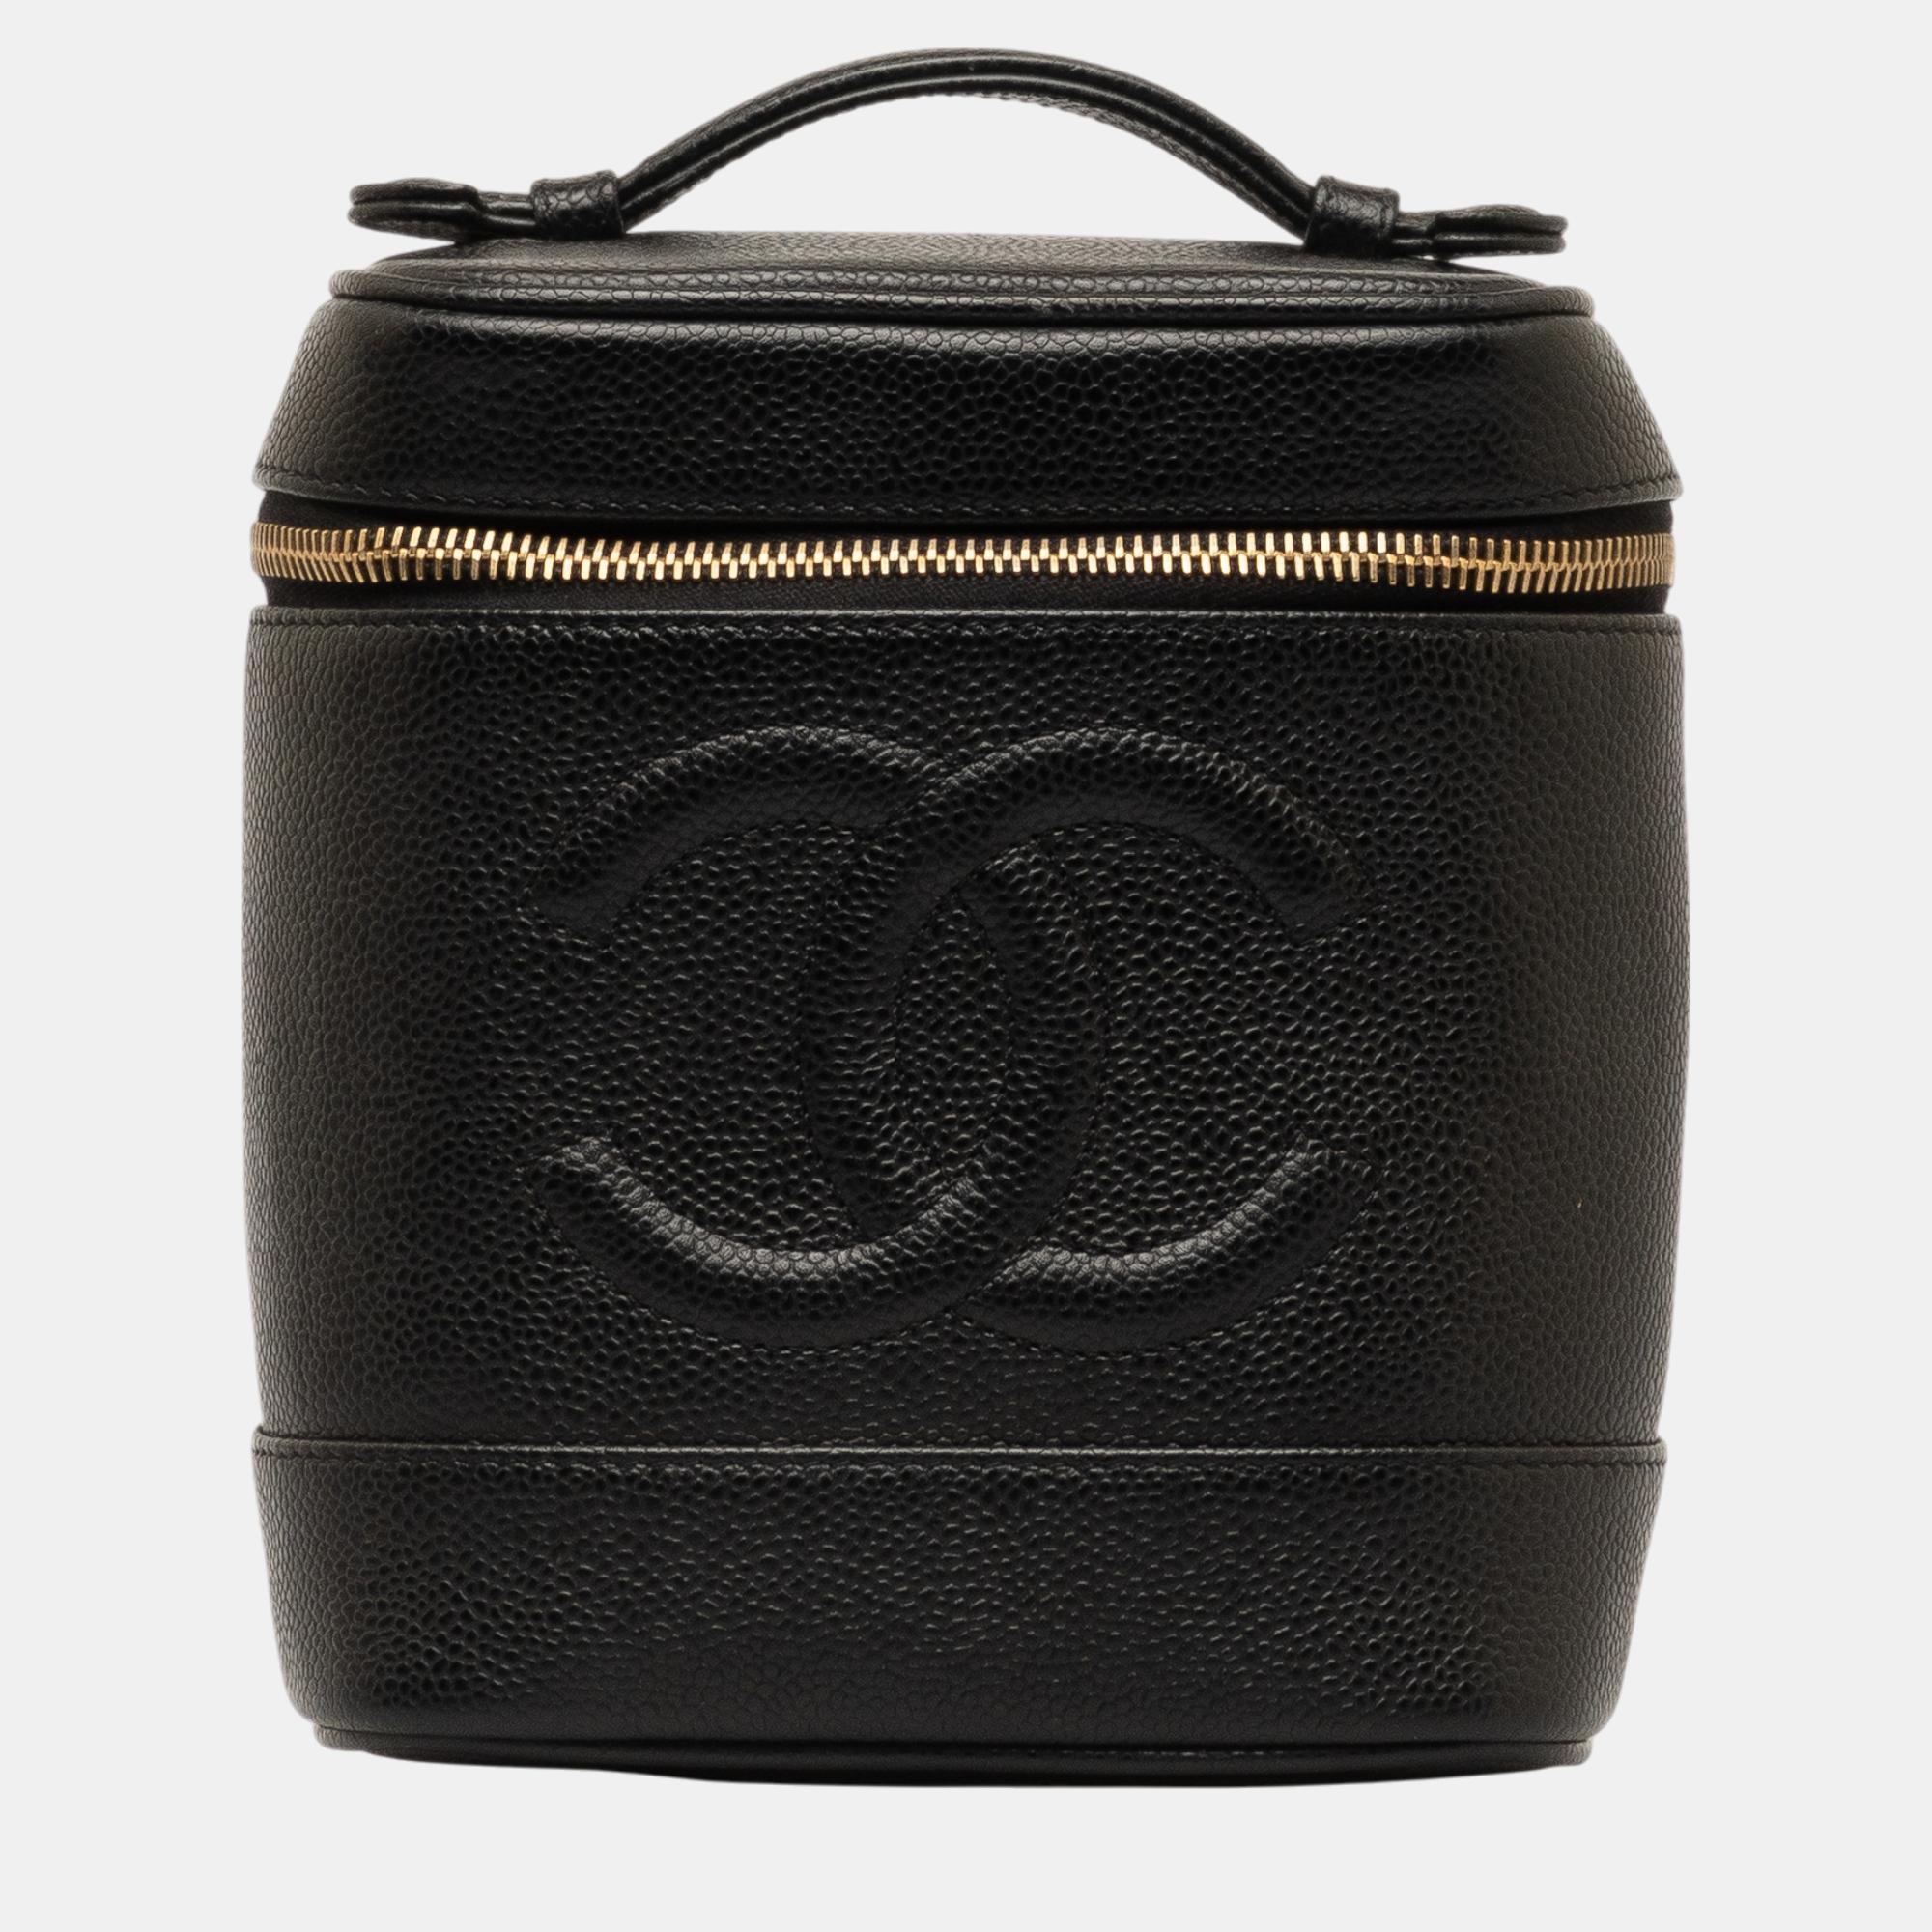 Chanel black cc caviar vanity bag